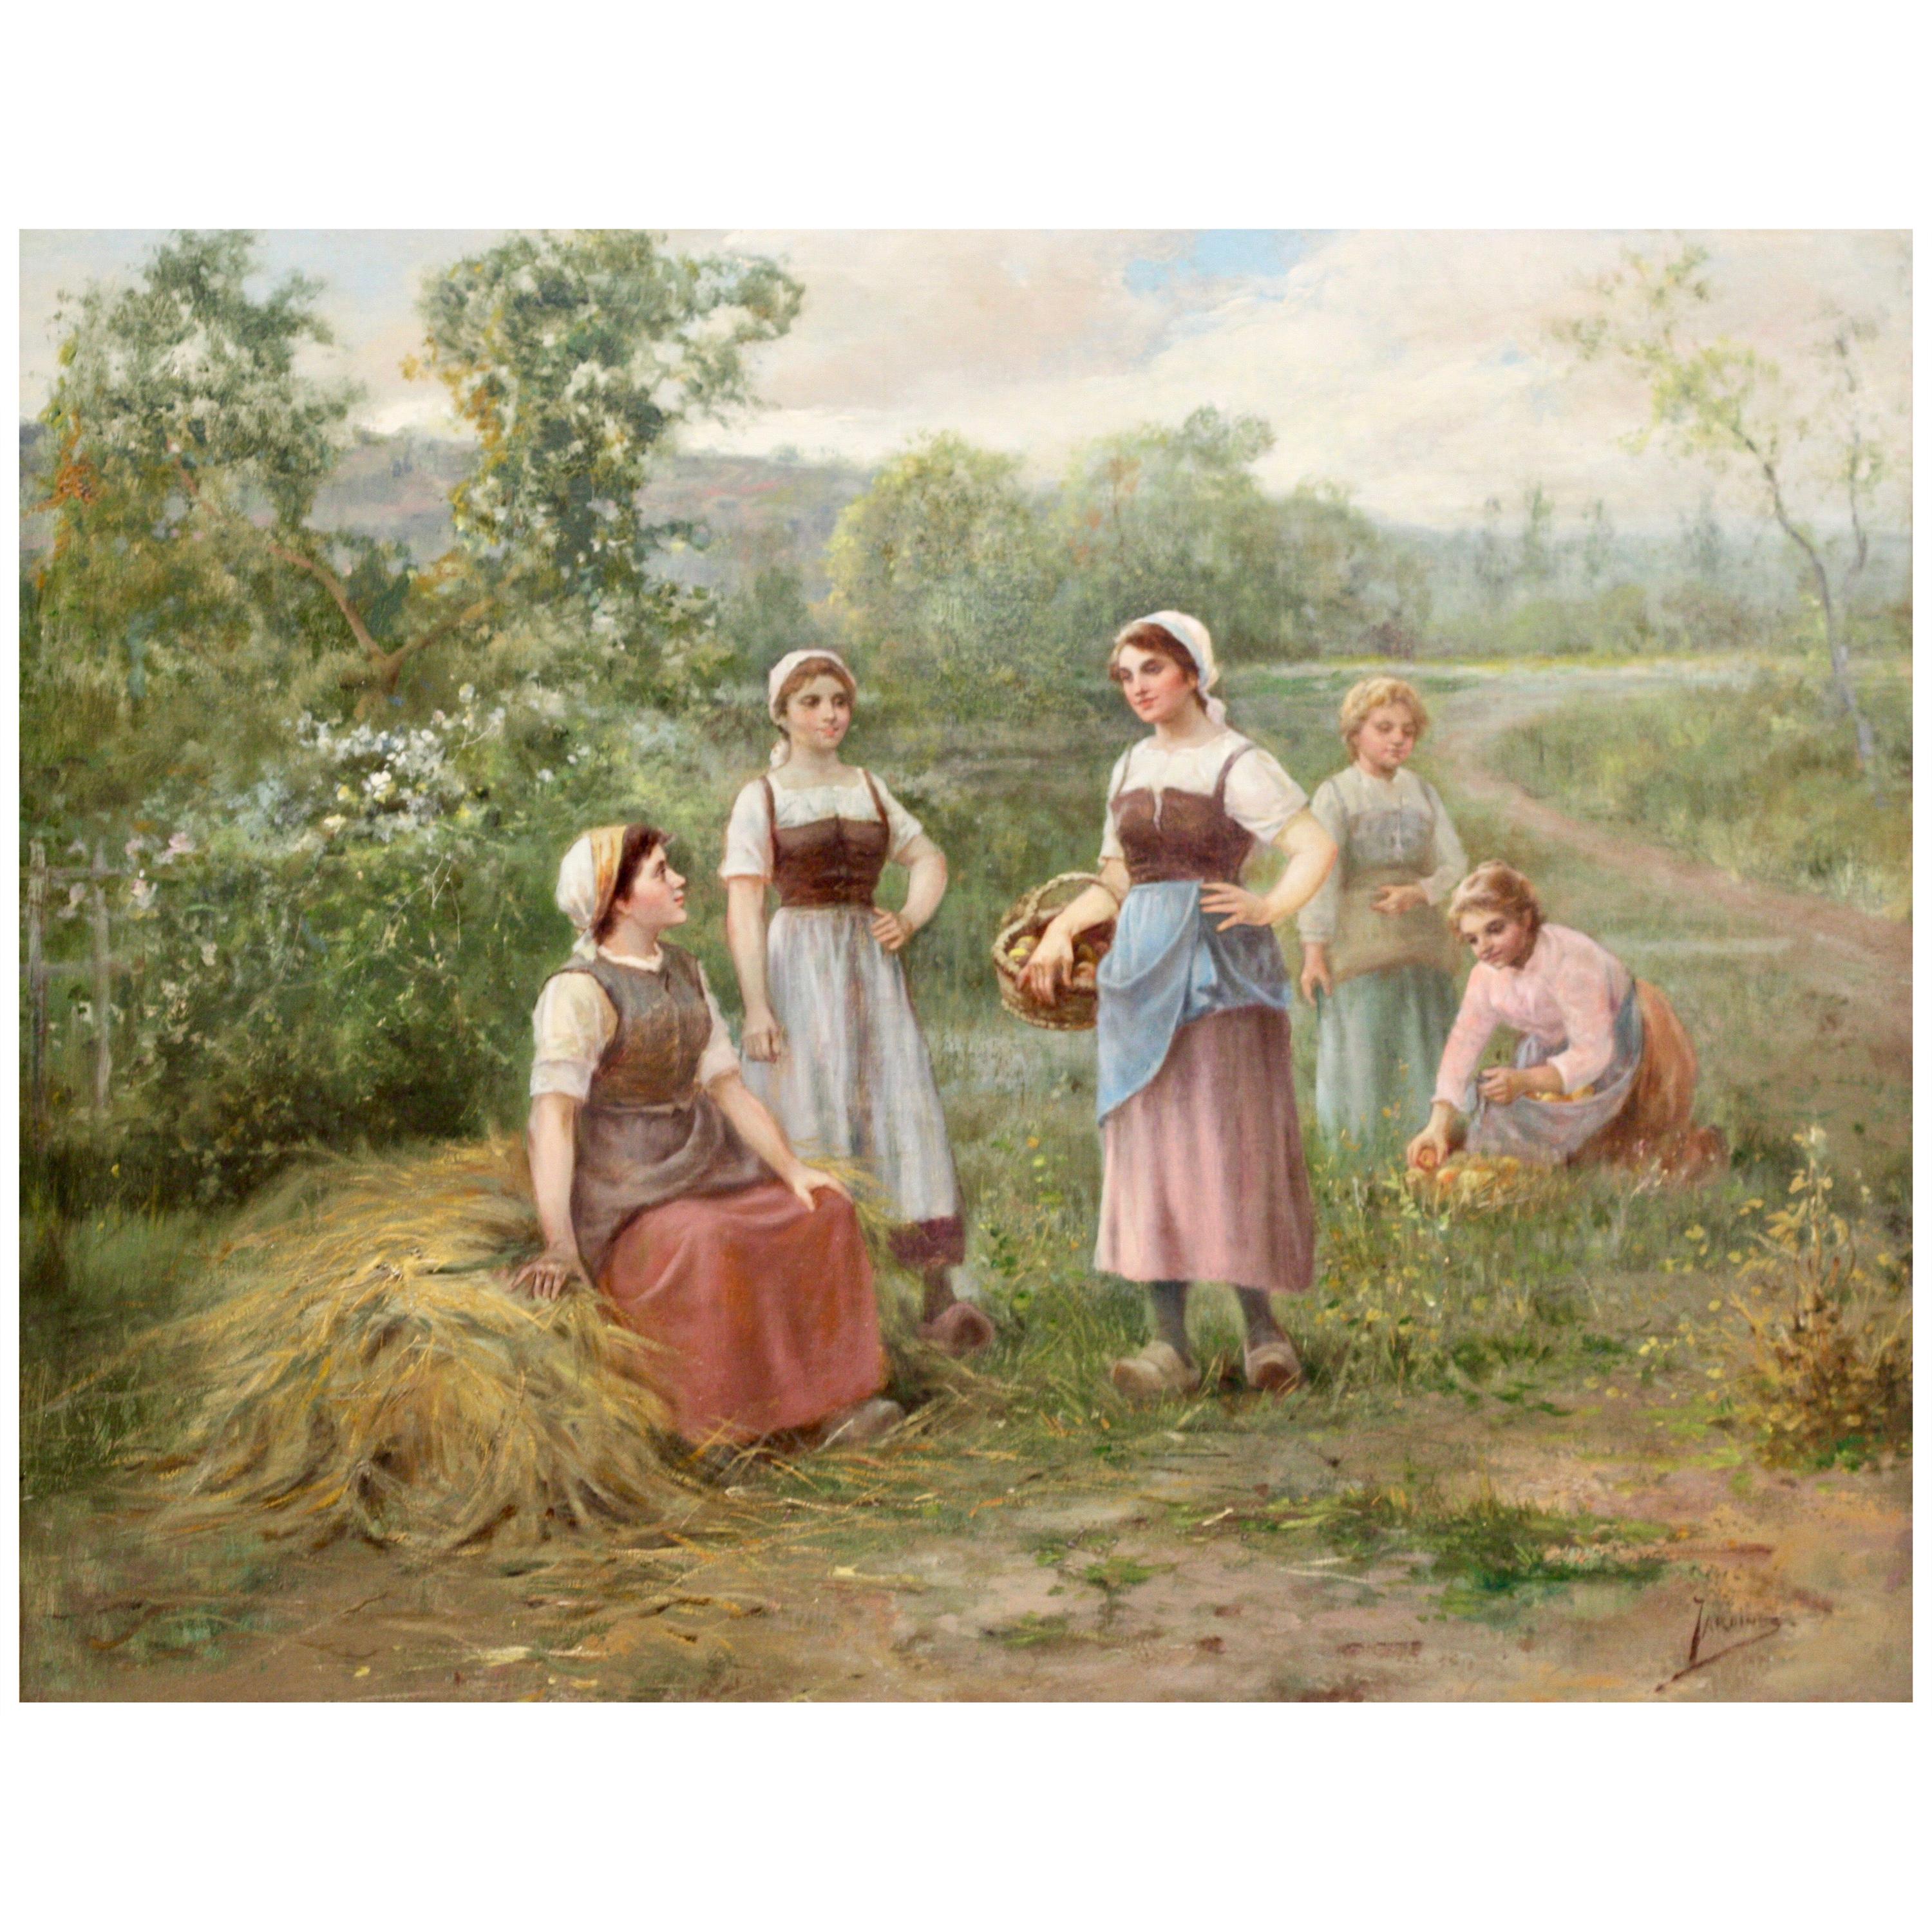 José Maria Jardines Oil on Canvas, Autumn Day For Sale